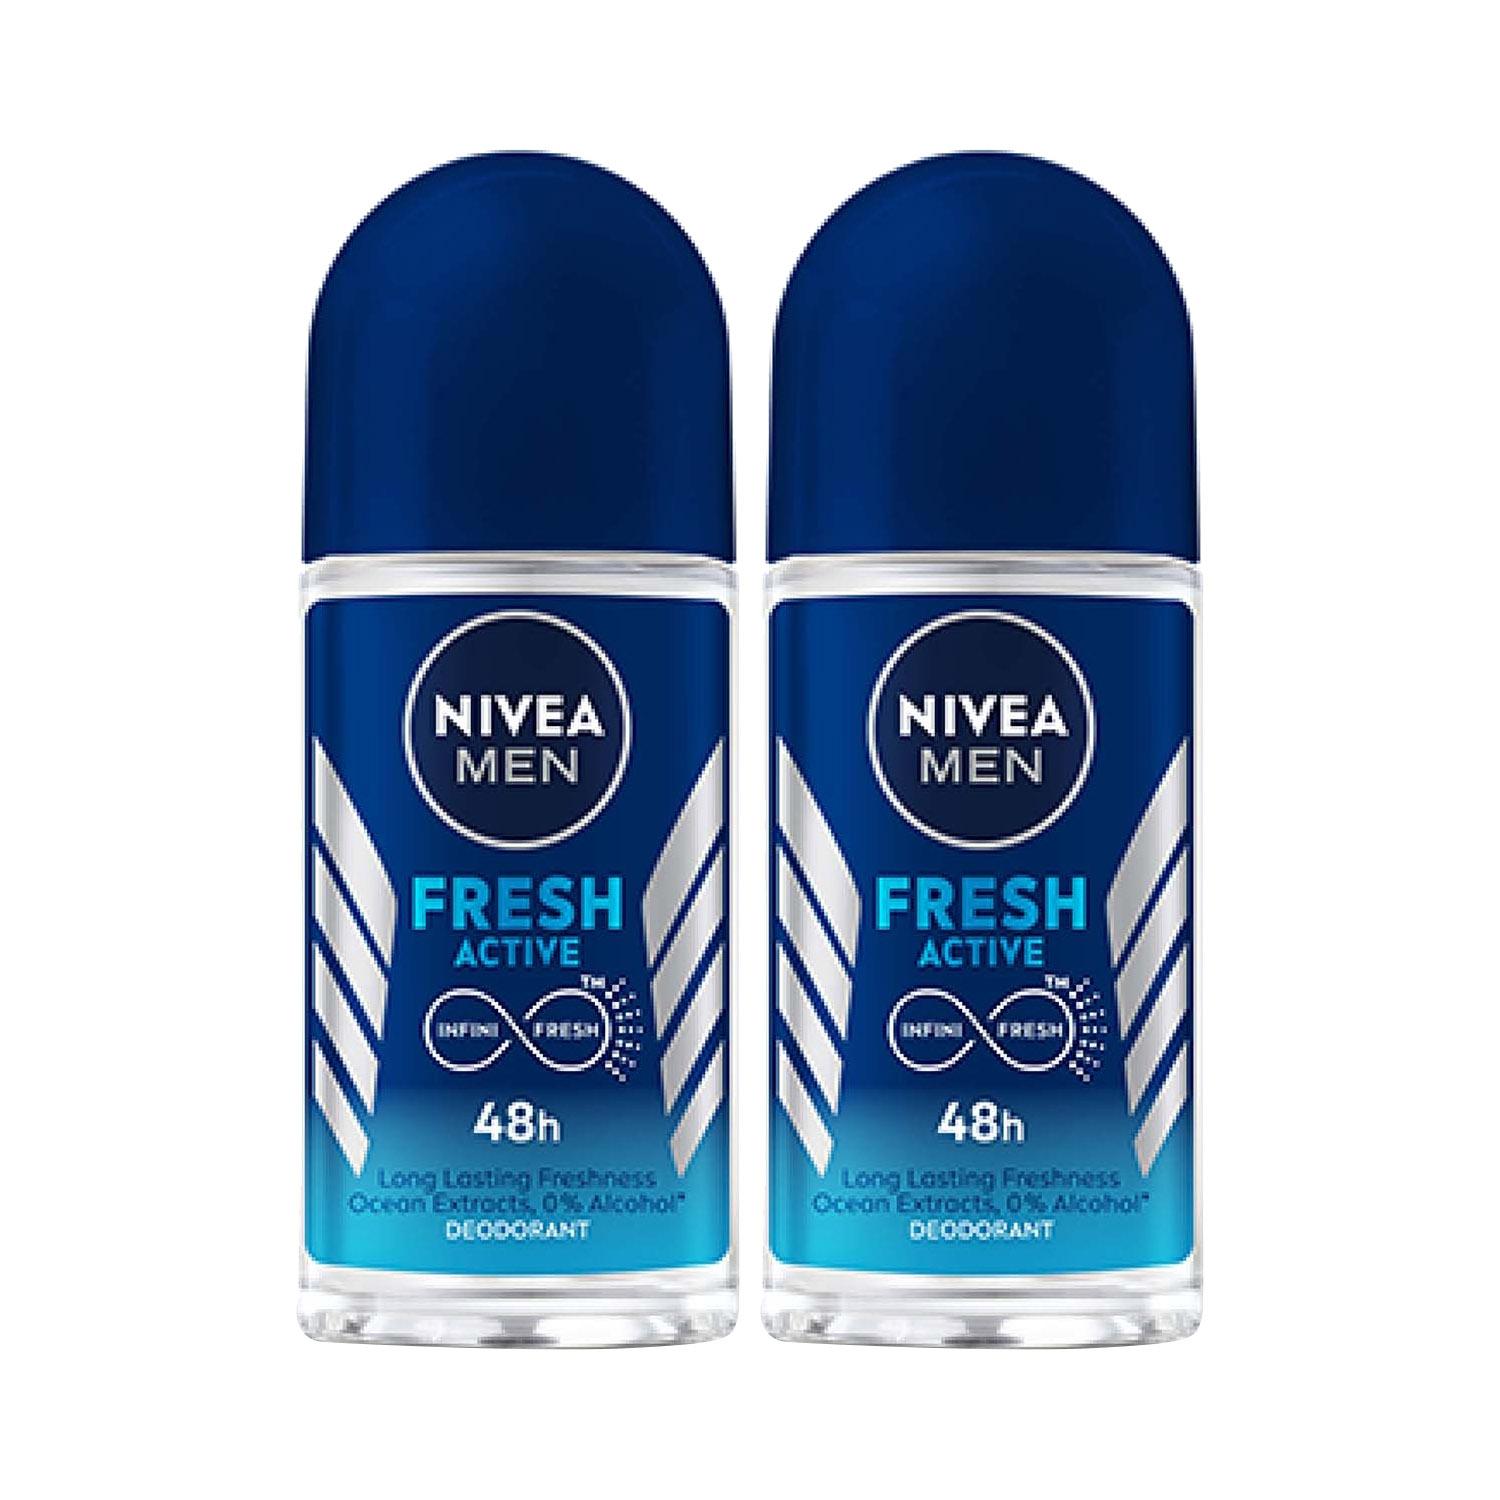 Nivea | Nivea Nfm Fresh Active Roll On (50ml) Pack of 2 Combo